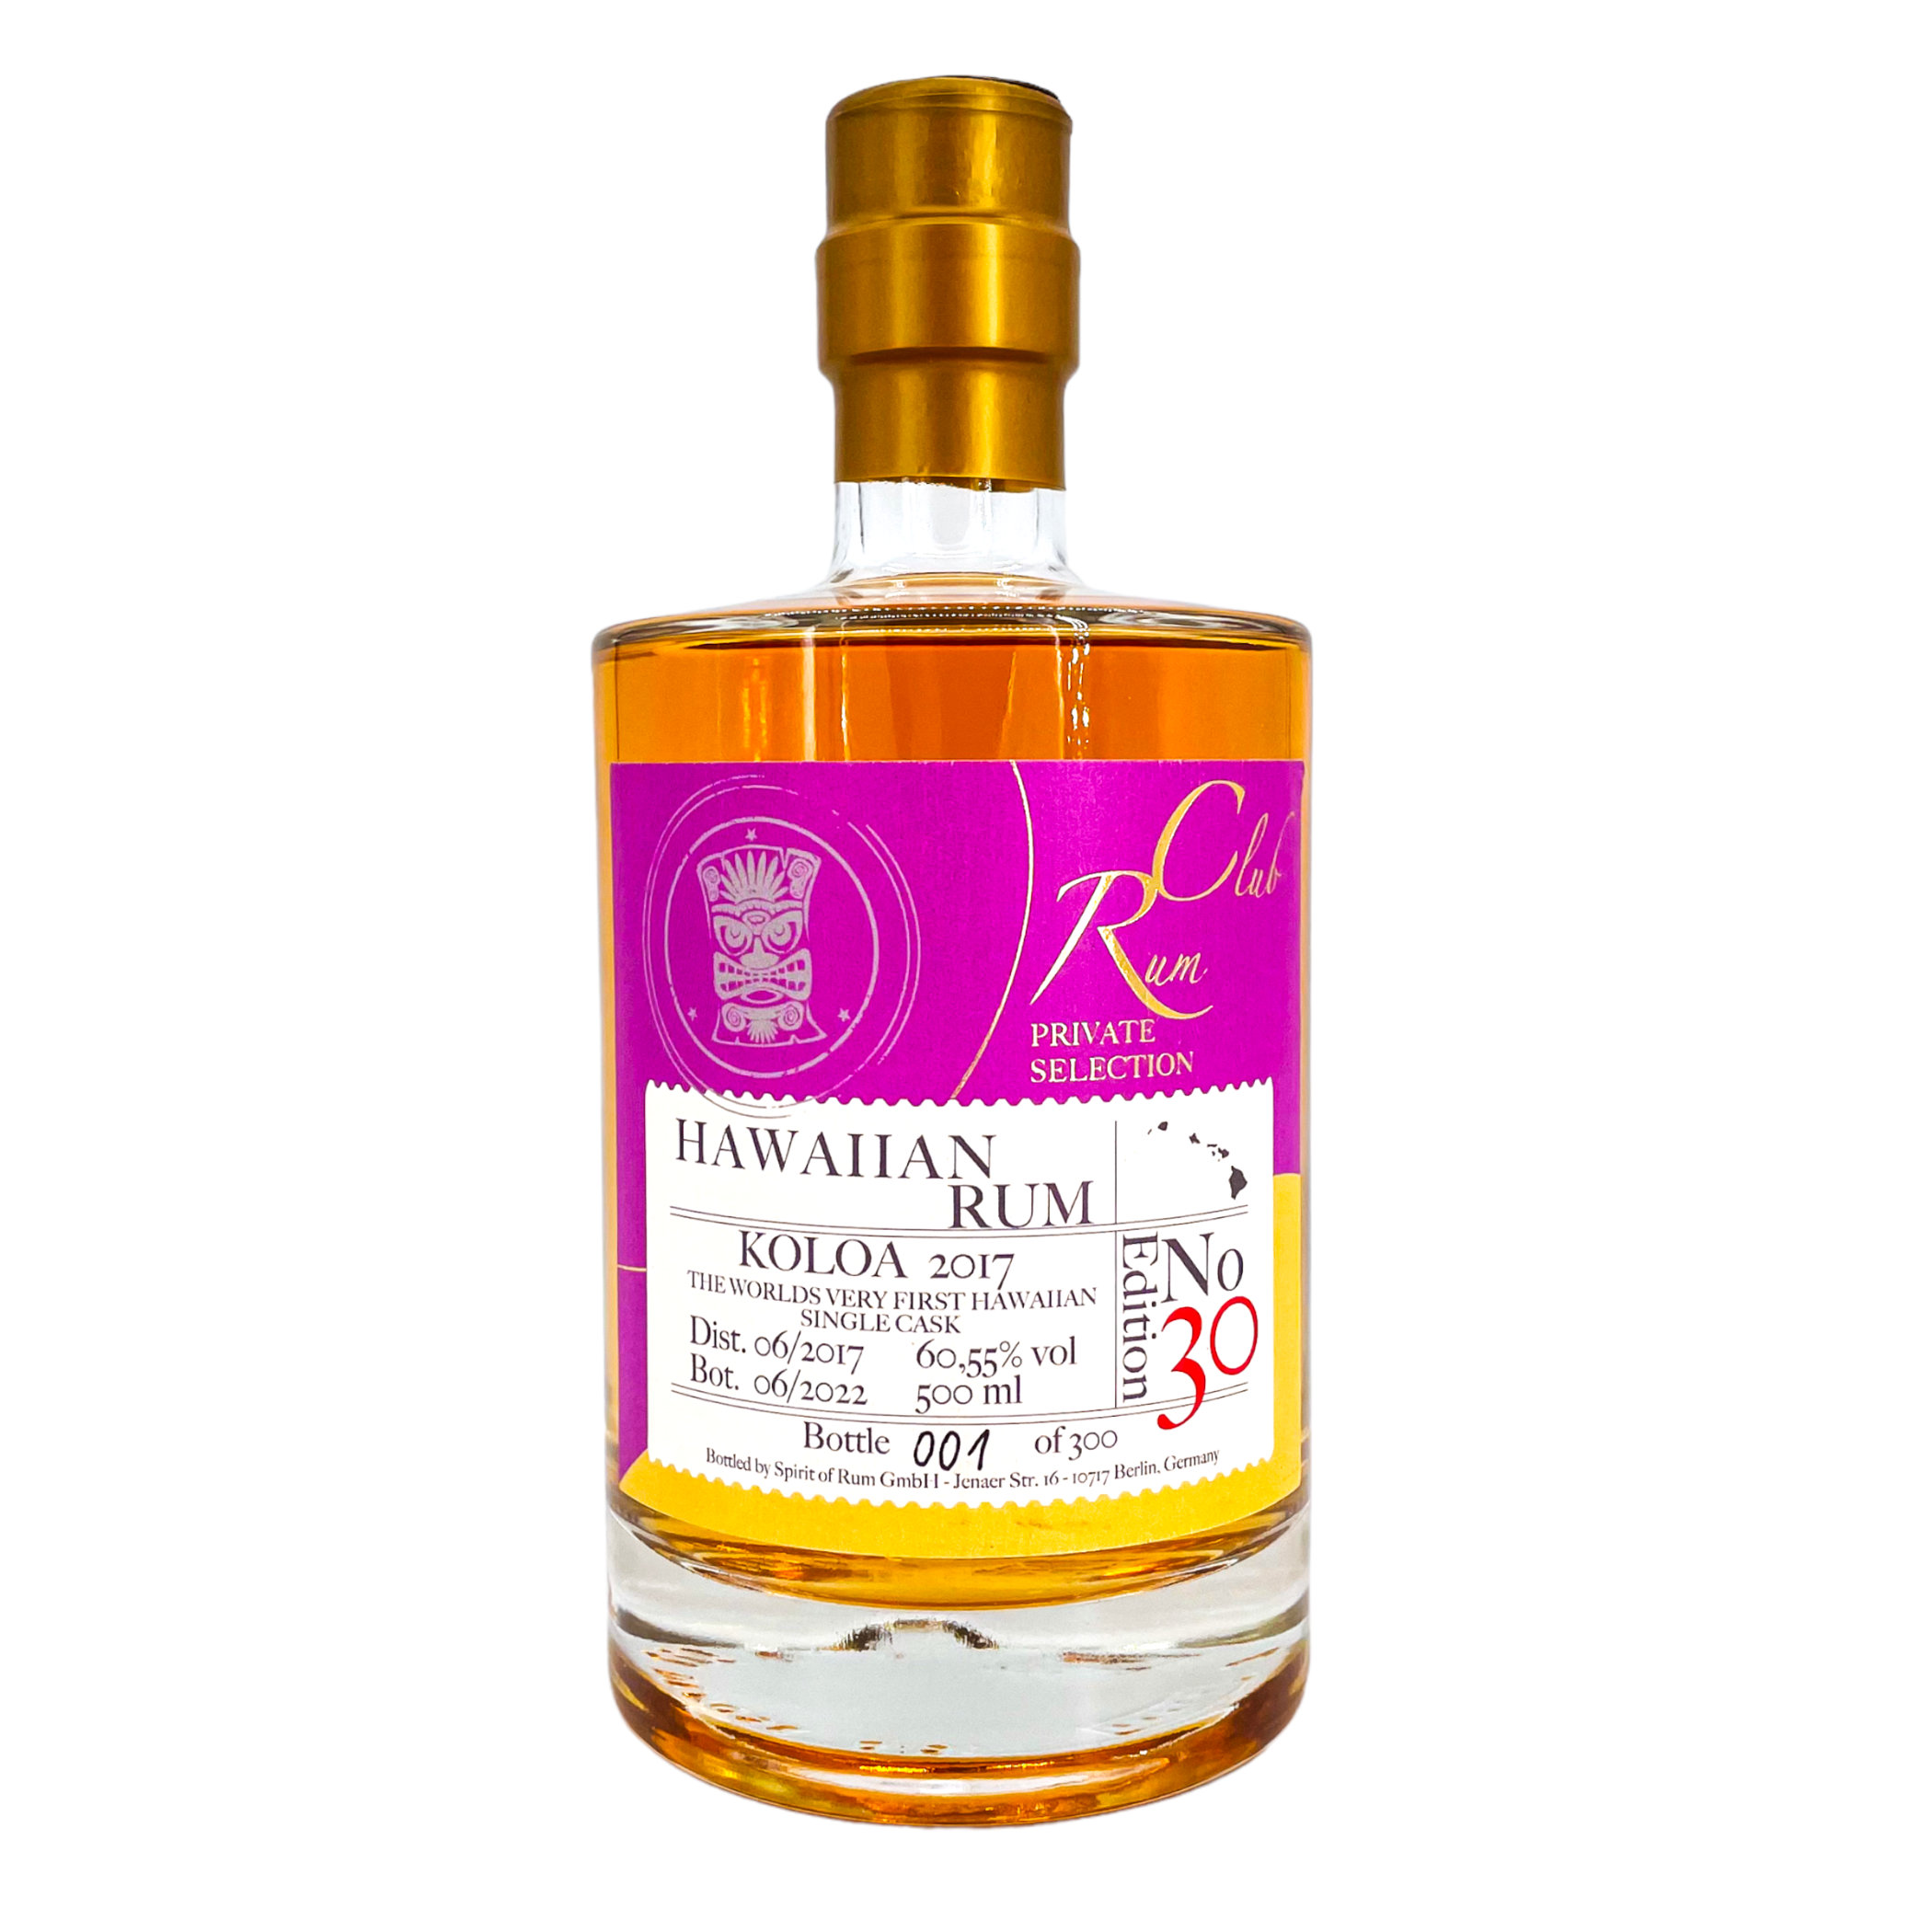 Rum Club Private Selection Edition 30 - Hawaiian Rum, Koloa 2017, 60,55% Alc.Vol., Spirit of Rum